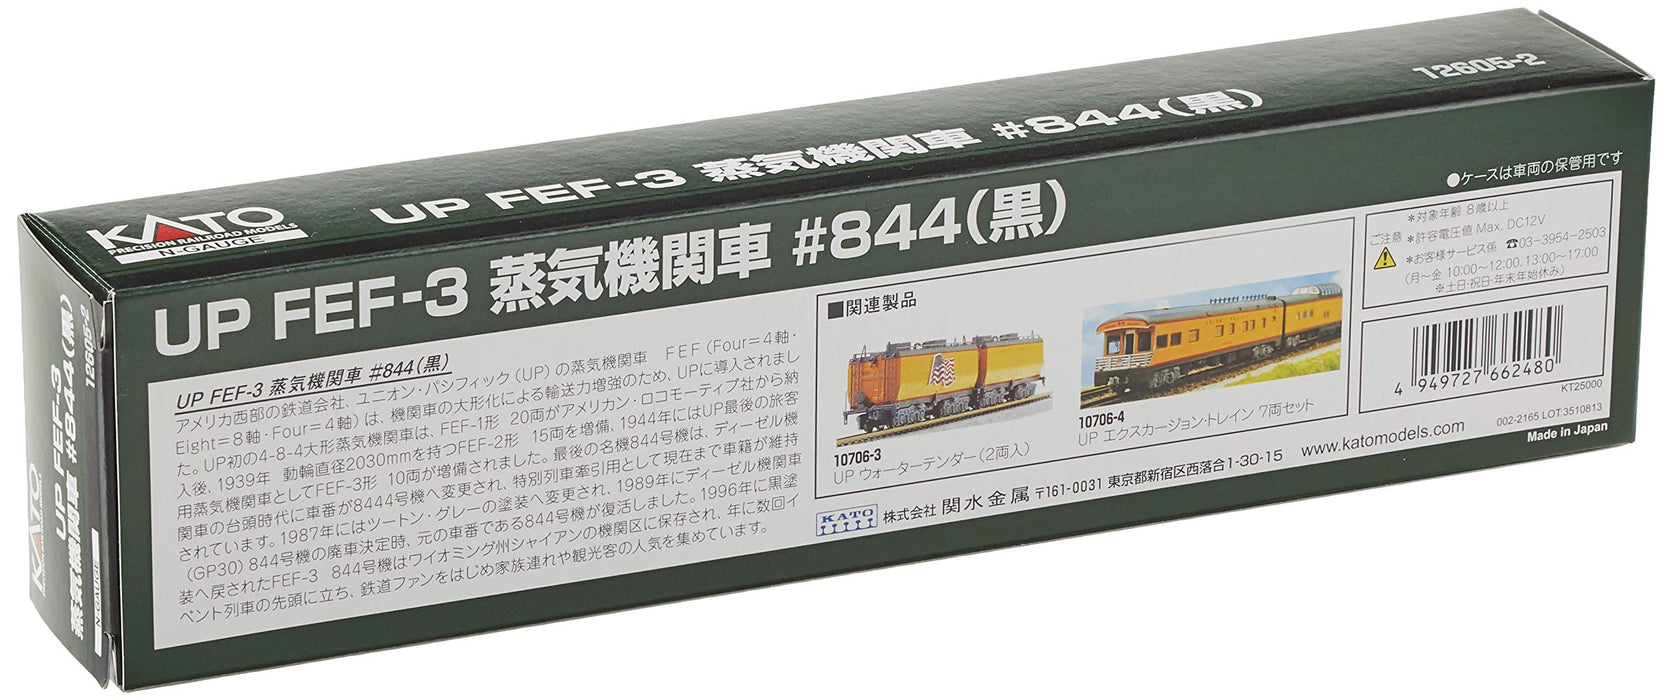 Kato Brand Rail Model Steam Locomotive - Black N Gauge Fef-3 #844 12605-2